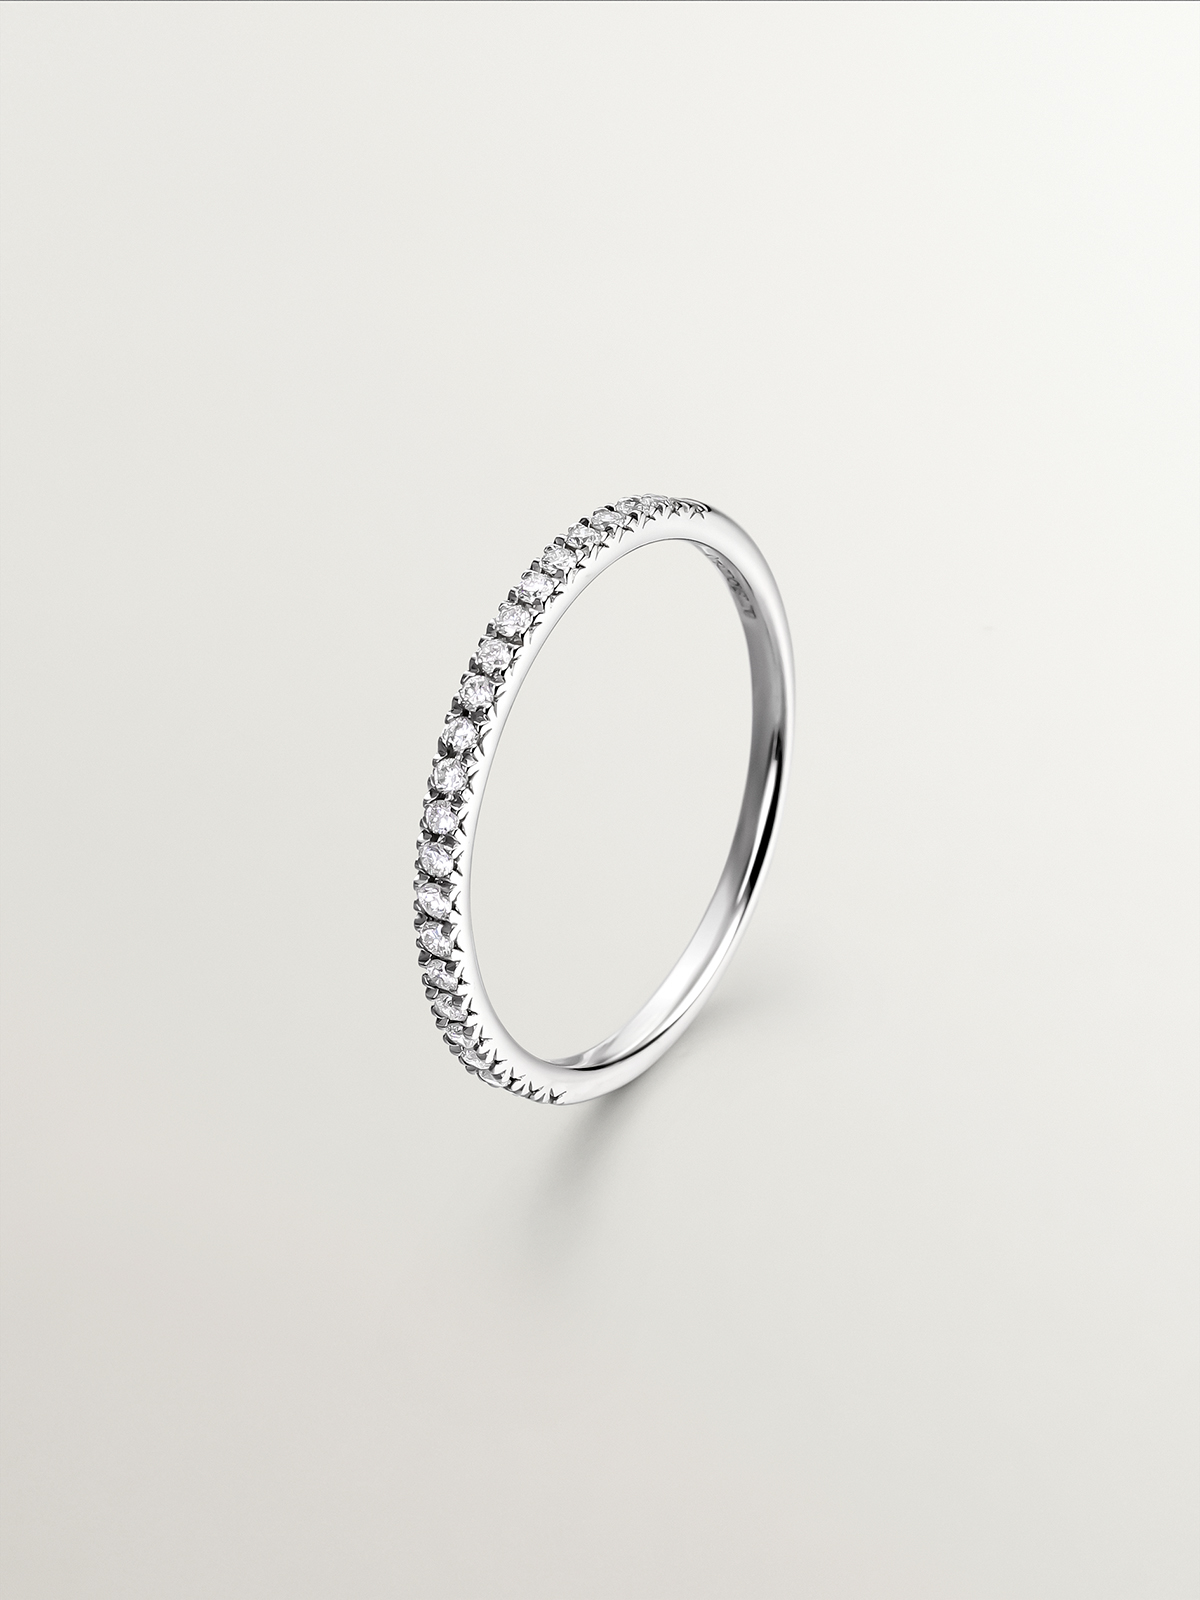 18K white gold ring with brilliant cut diamonds